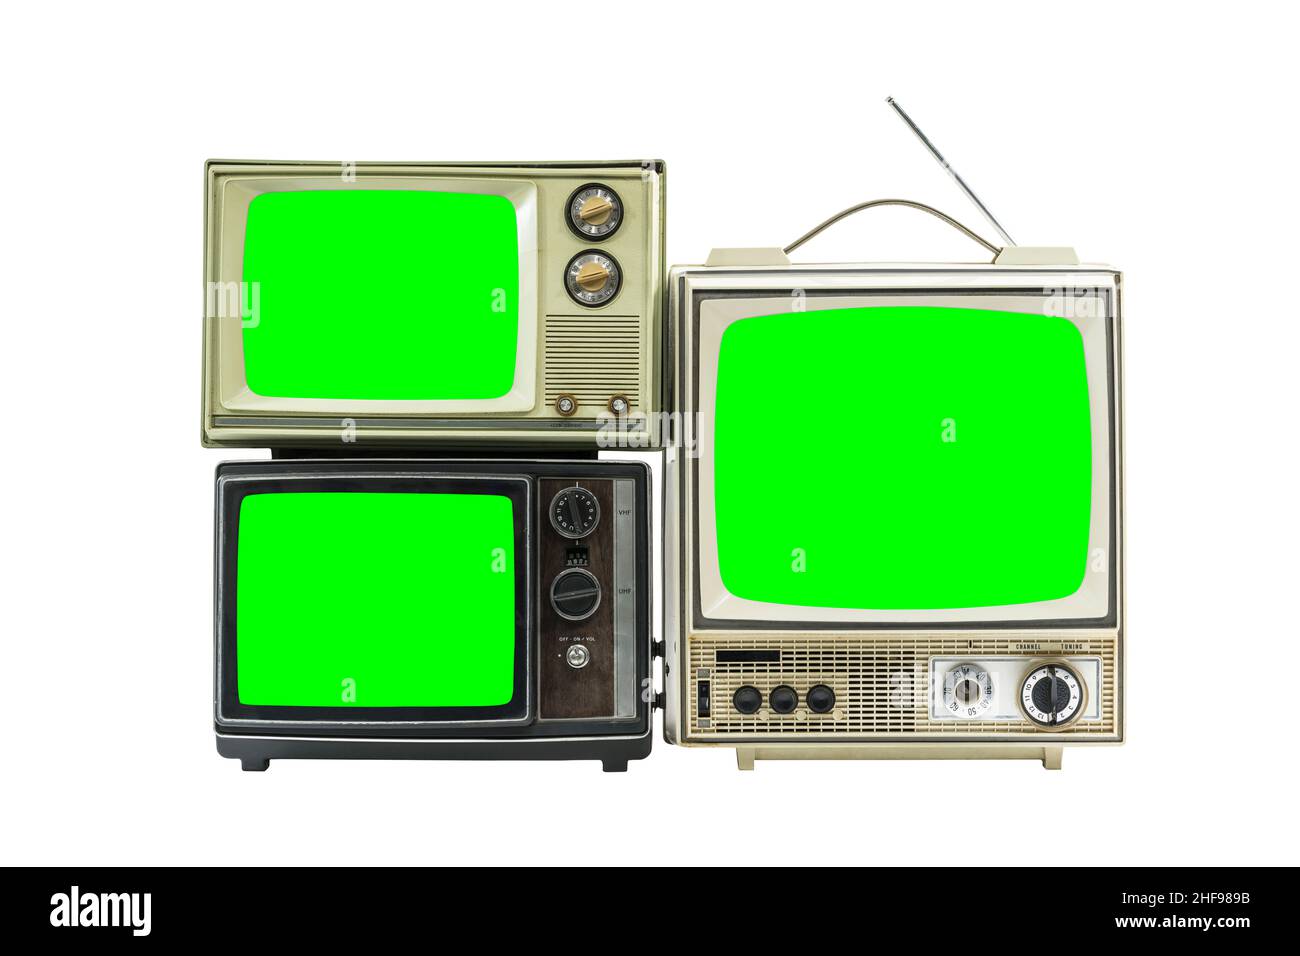 Tres televisores clásicos aislados en blanco con pantallas verdes con teclas cromadas. Foto de stock